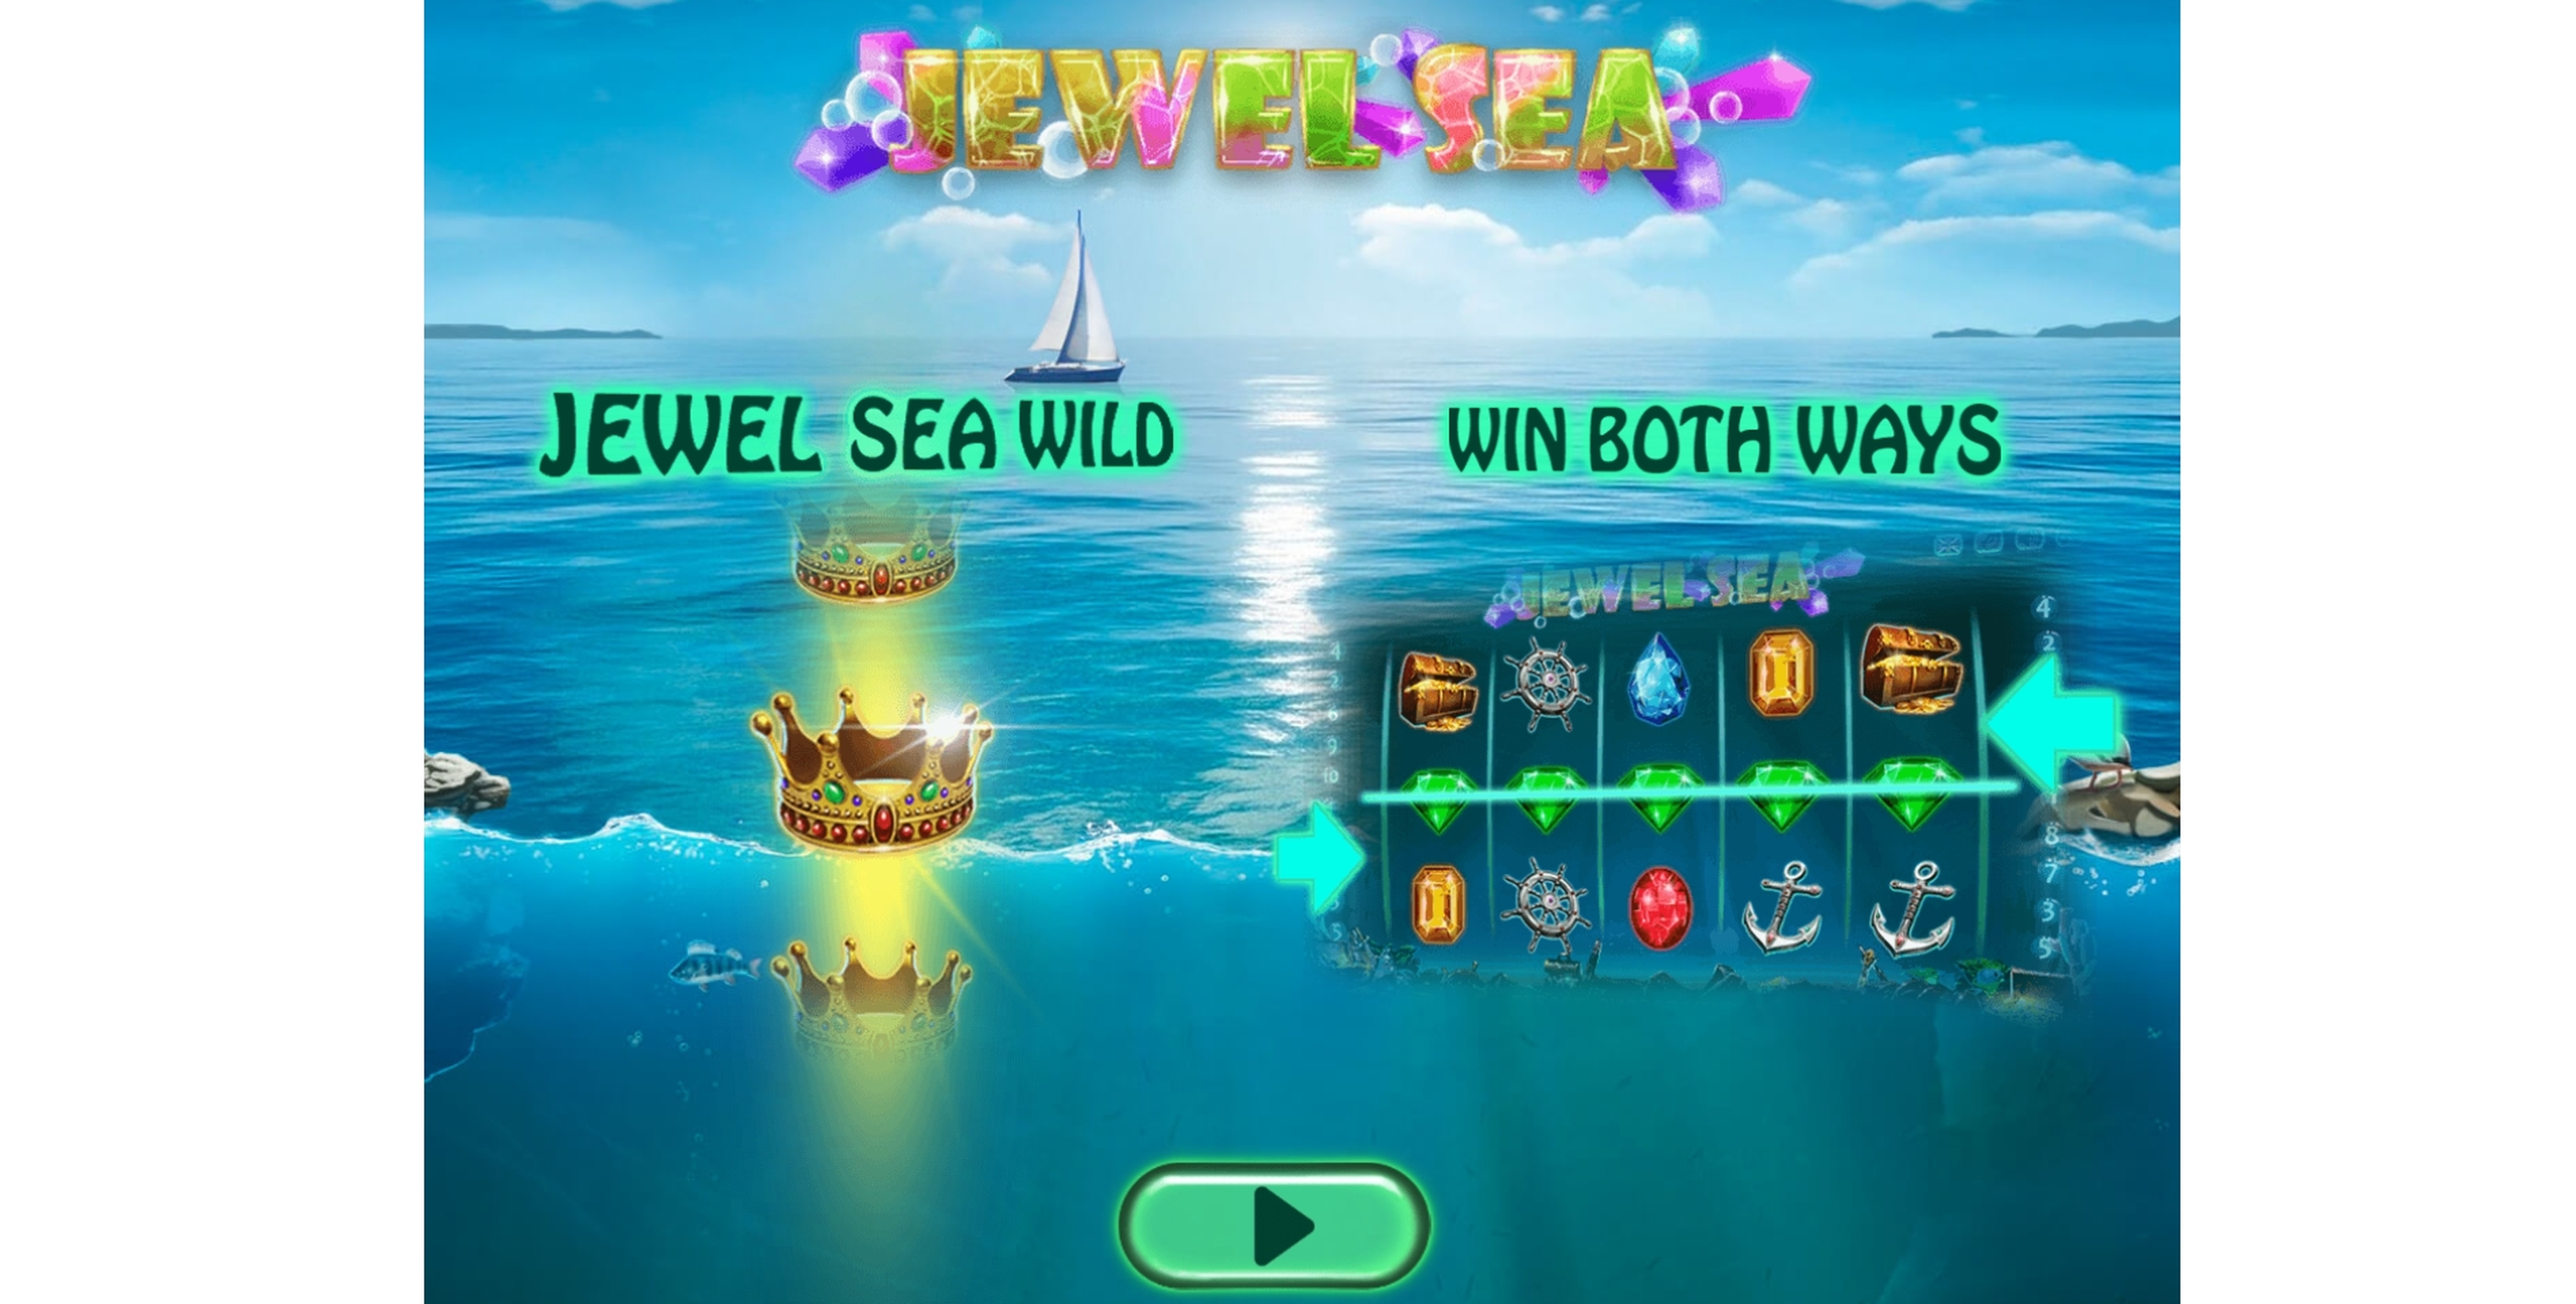 Play Jewel Sea Free Casino Slot Game by Fugaso